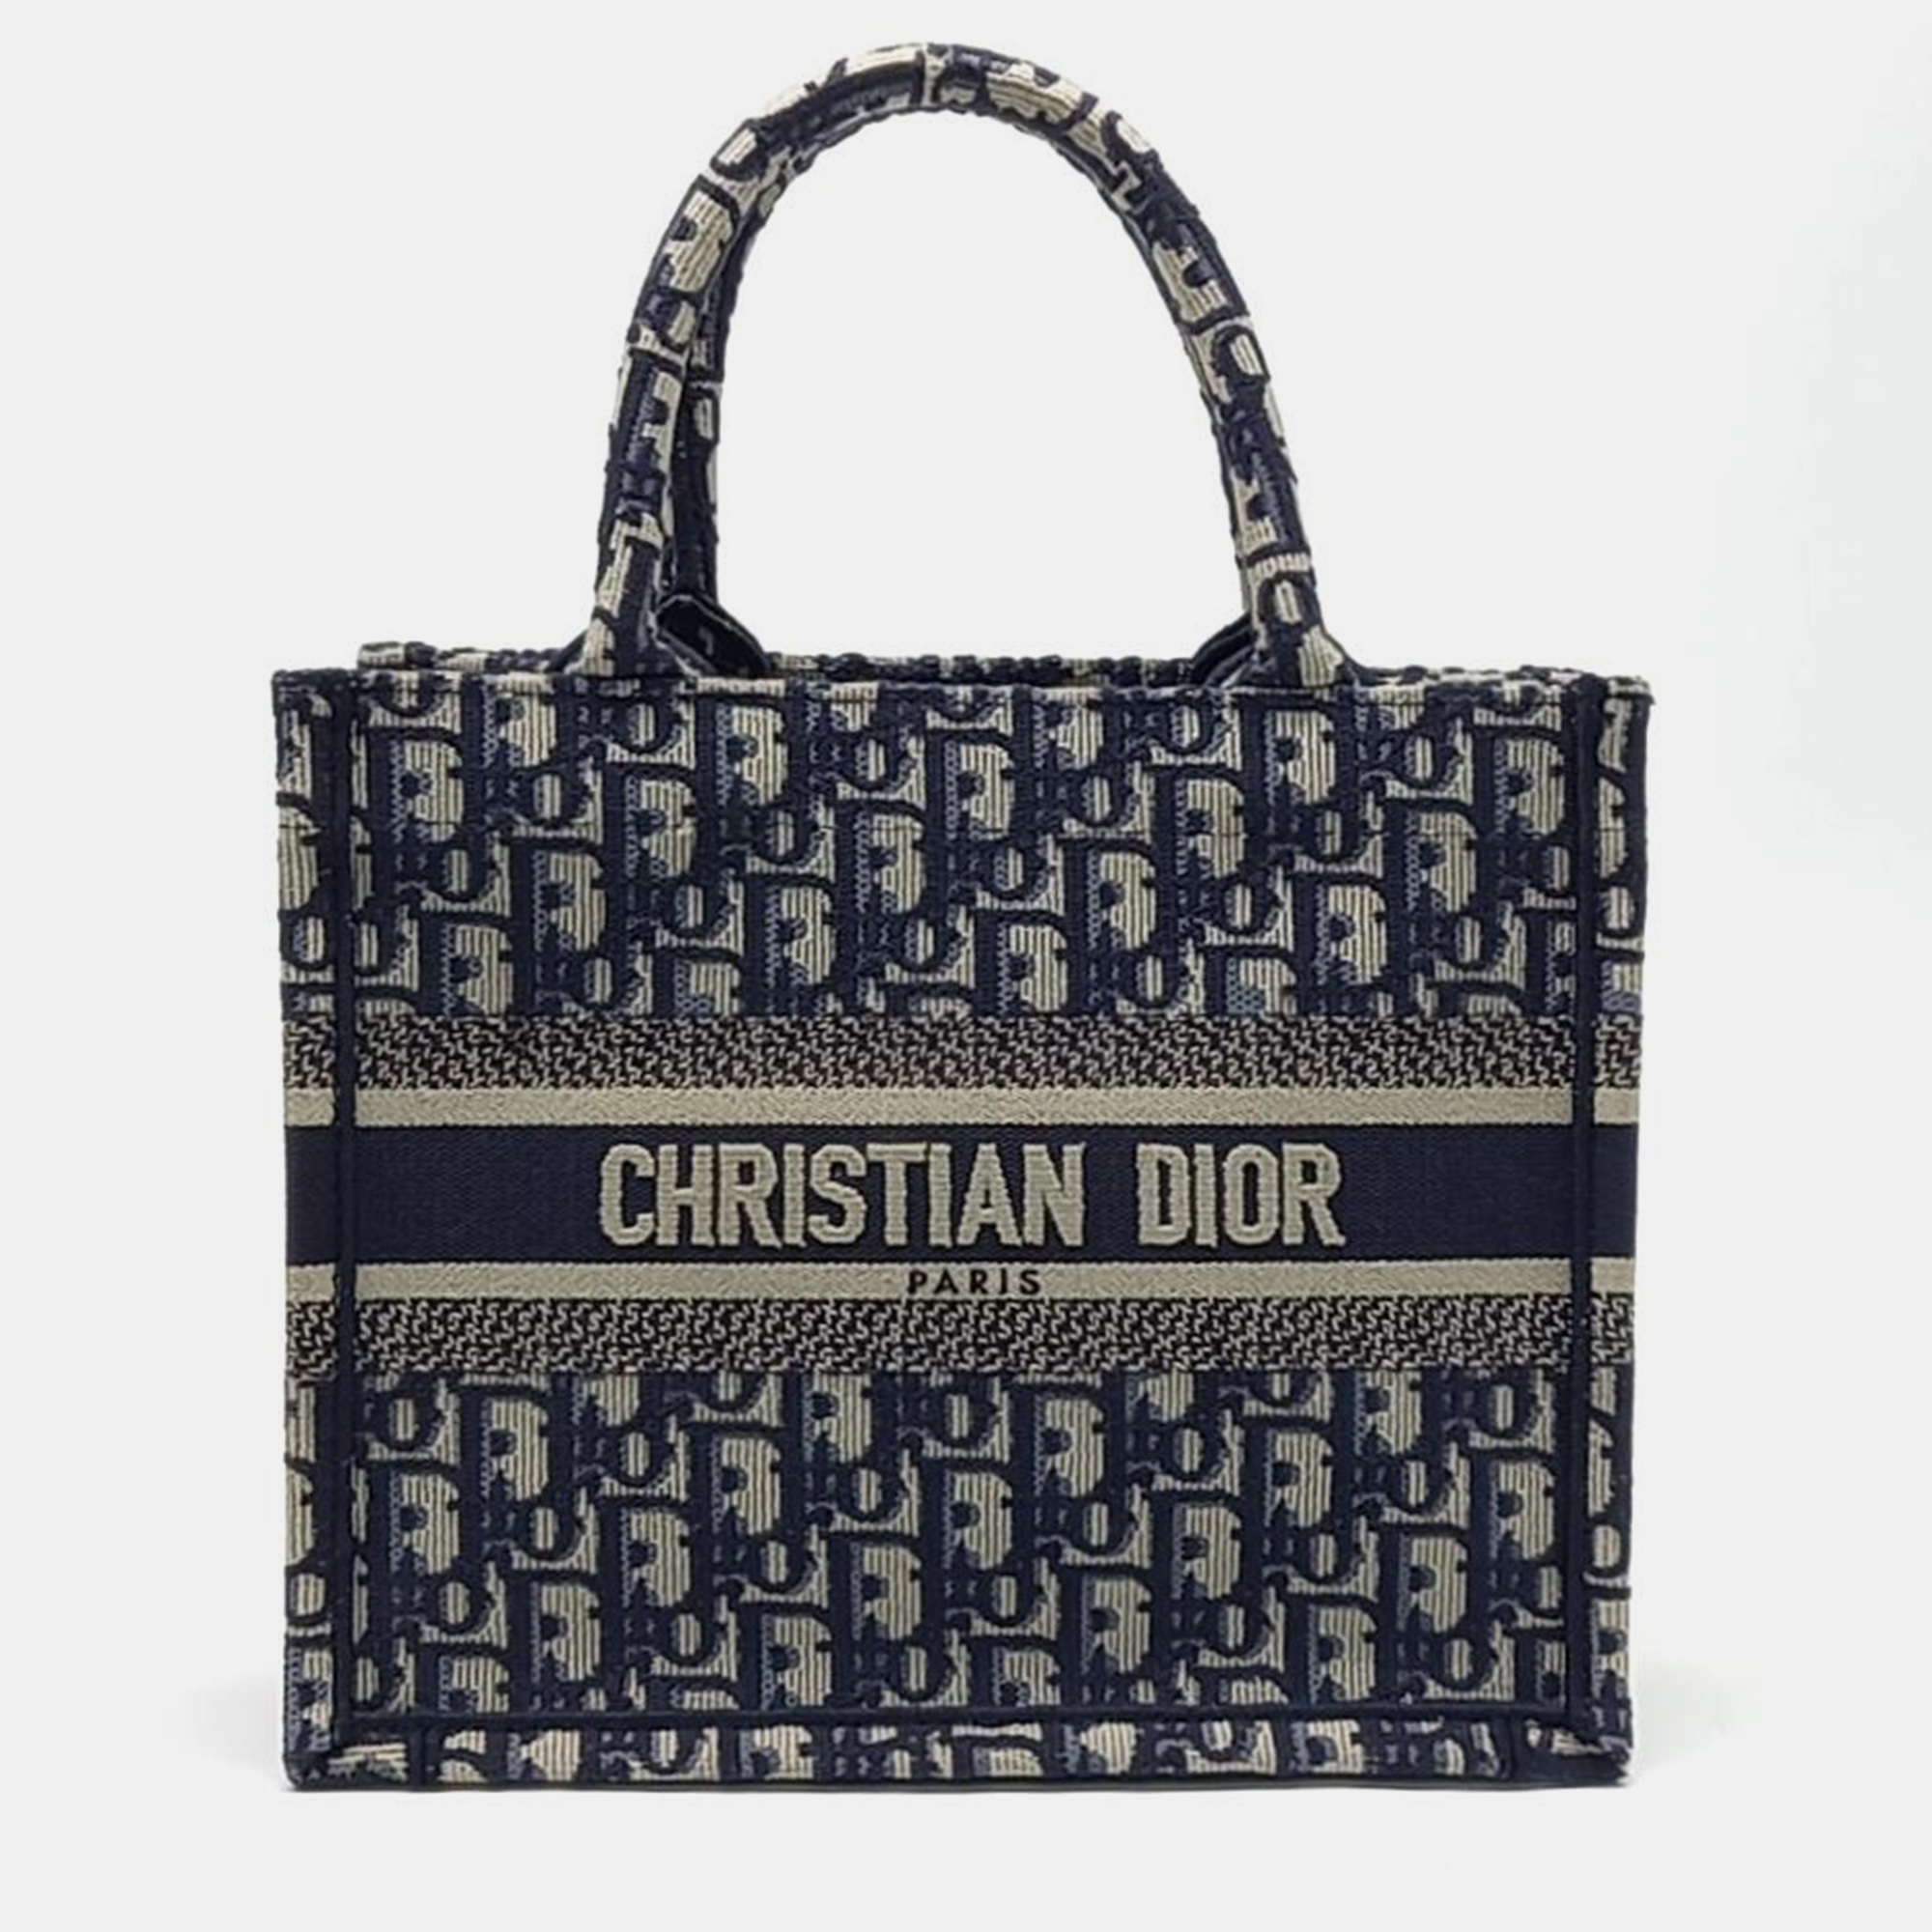 Christian dior book tote handbag 26 m1265zriw